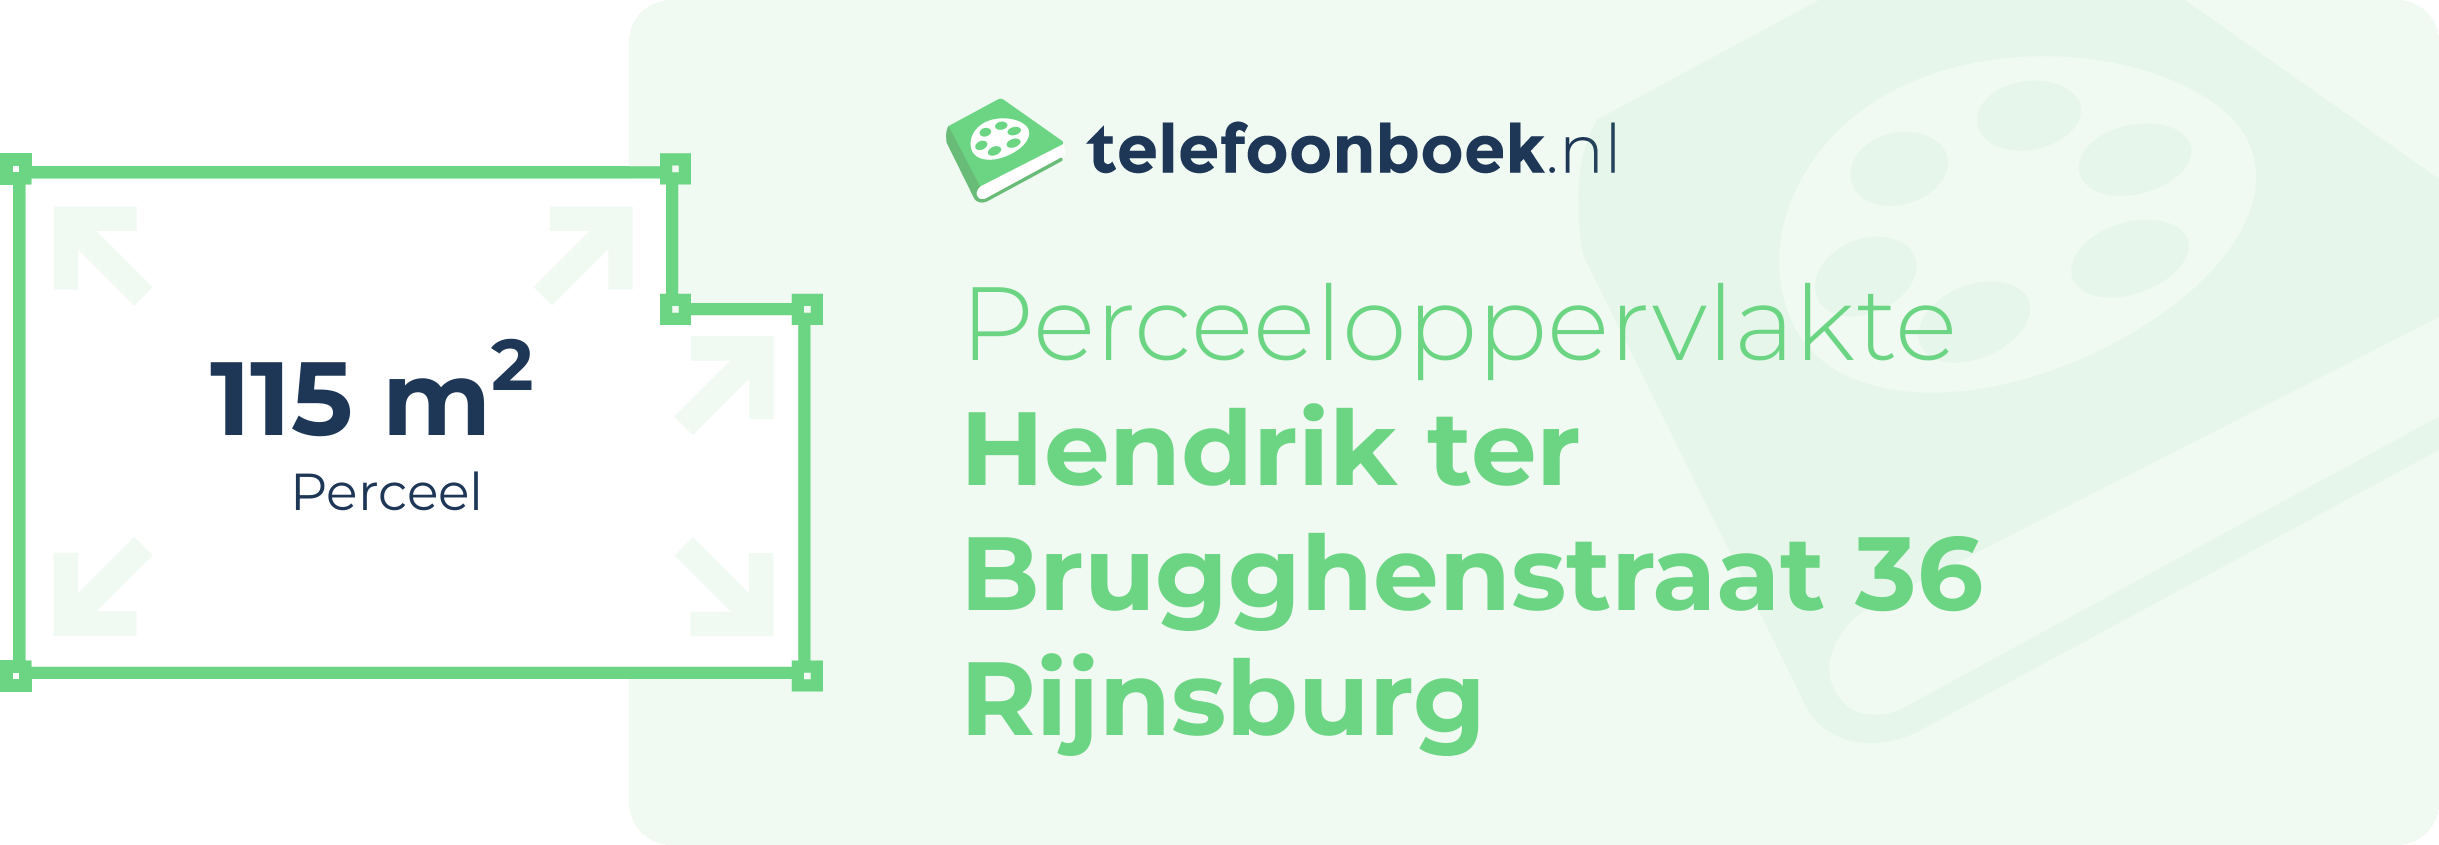 Perceeloppervlakte Hendrik Ter Brugghenstraat 36 Rijnsburg